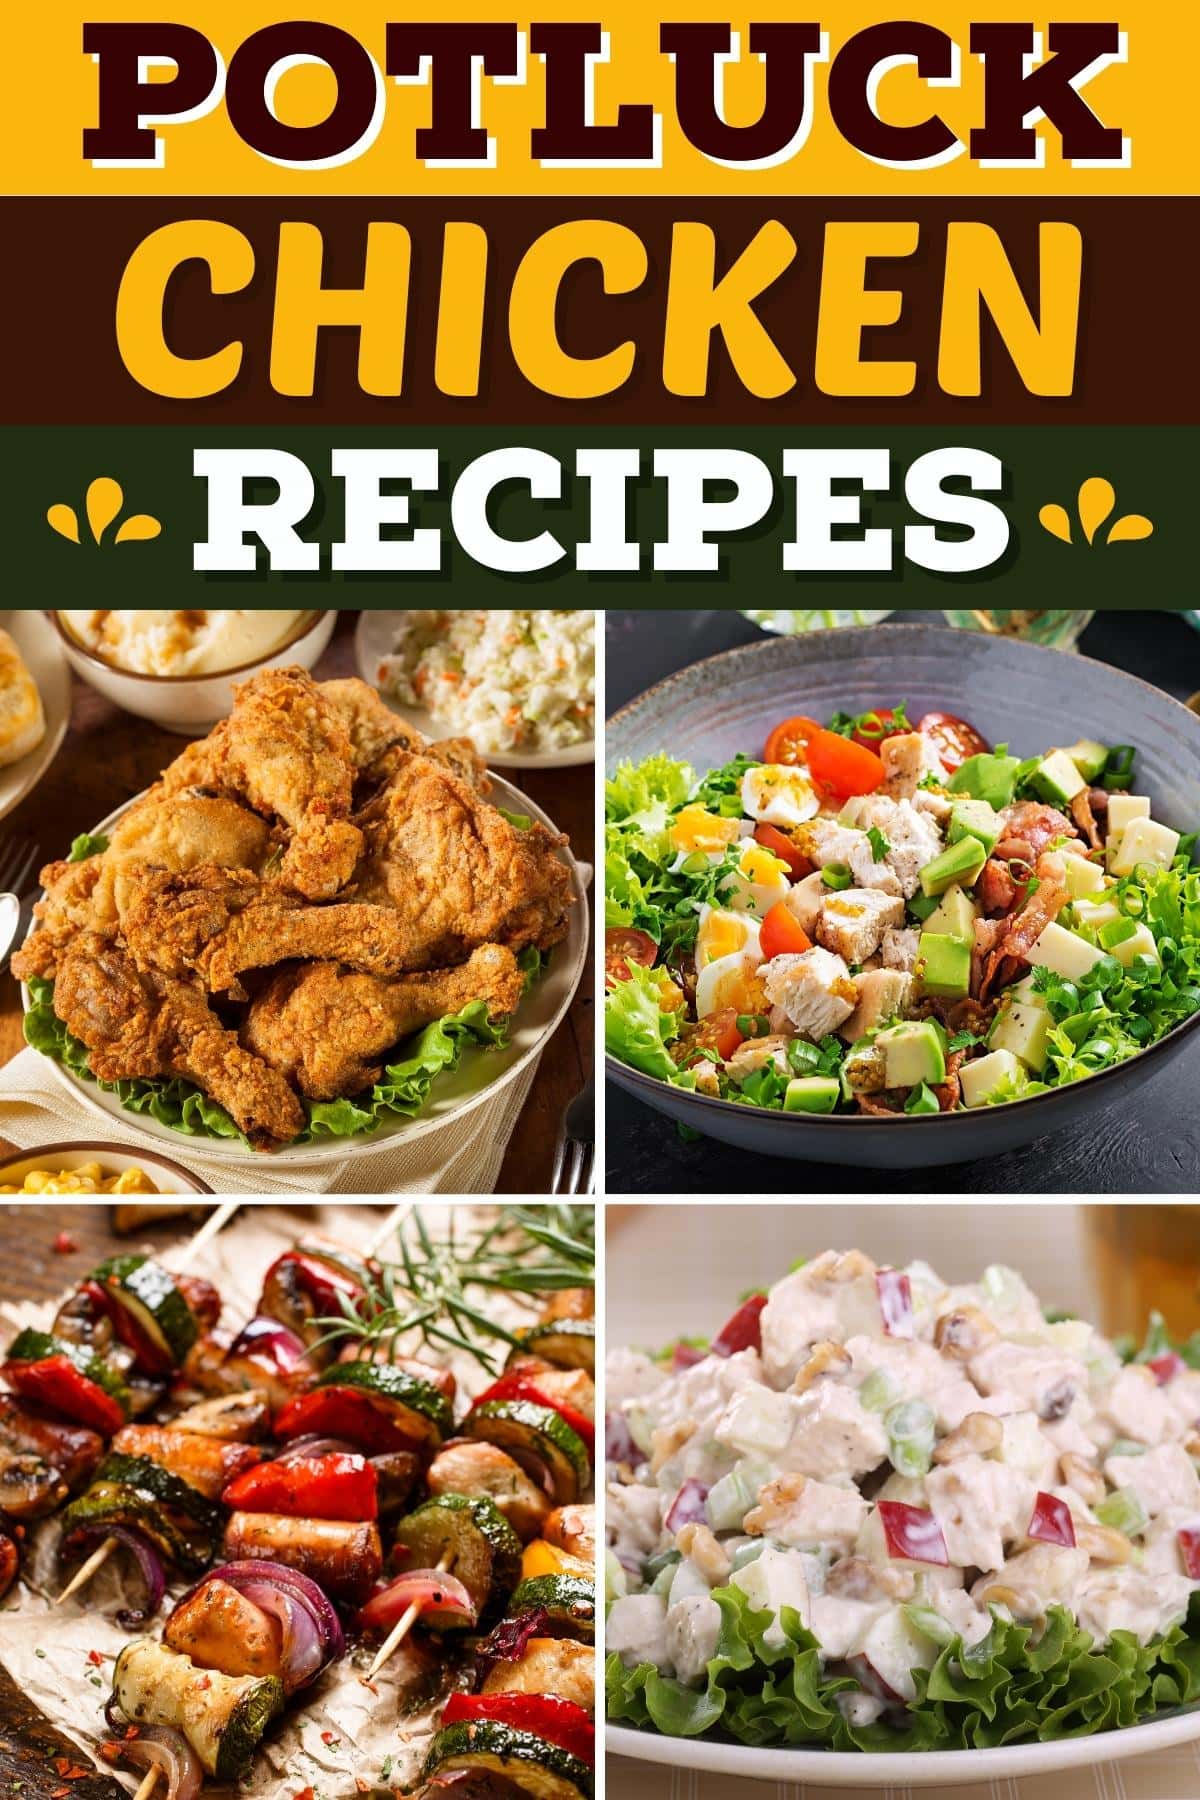 17 Easy Potluck Chicken Recipes - Insanely Good